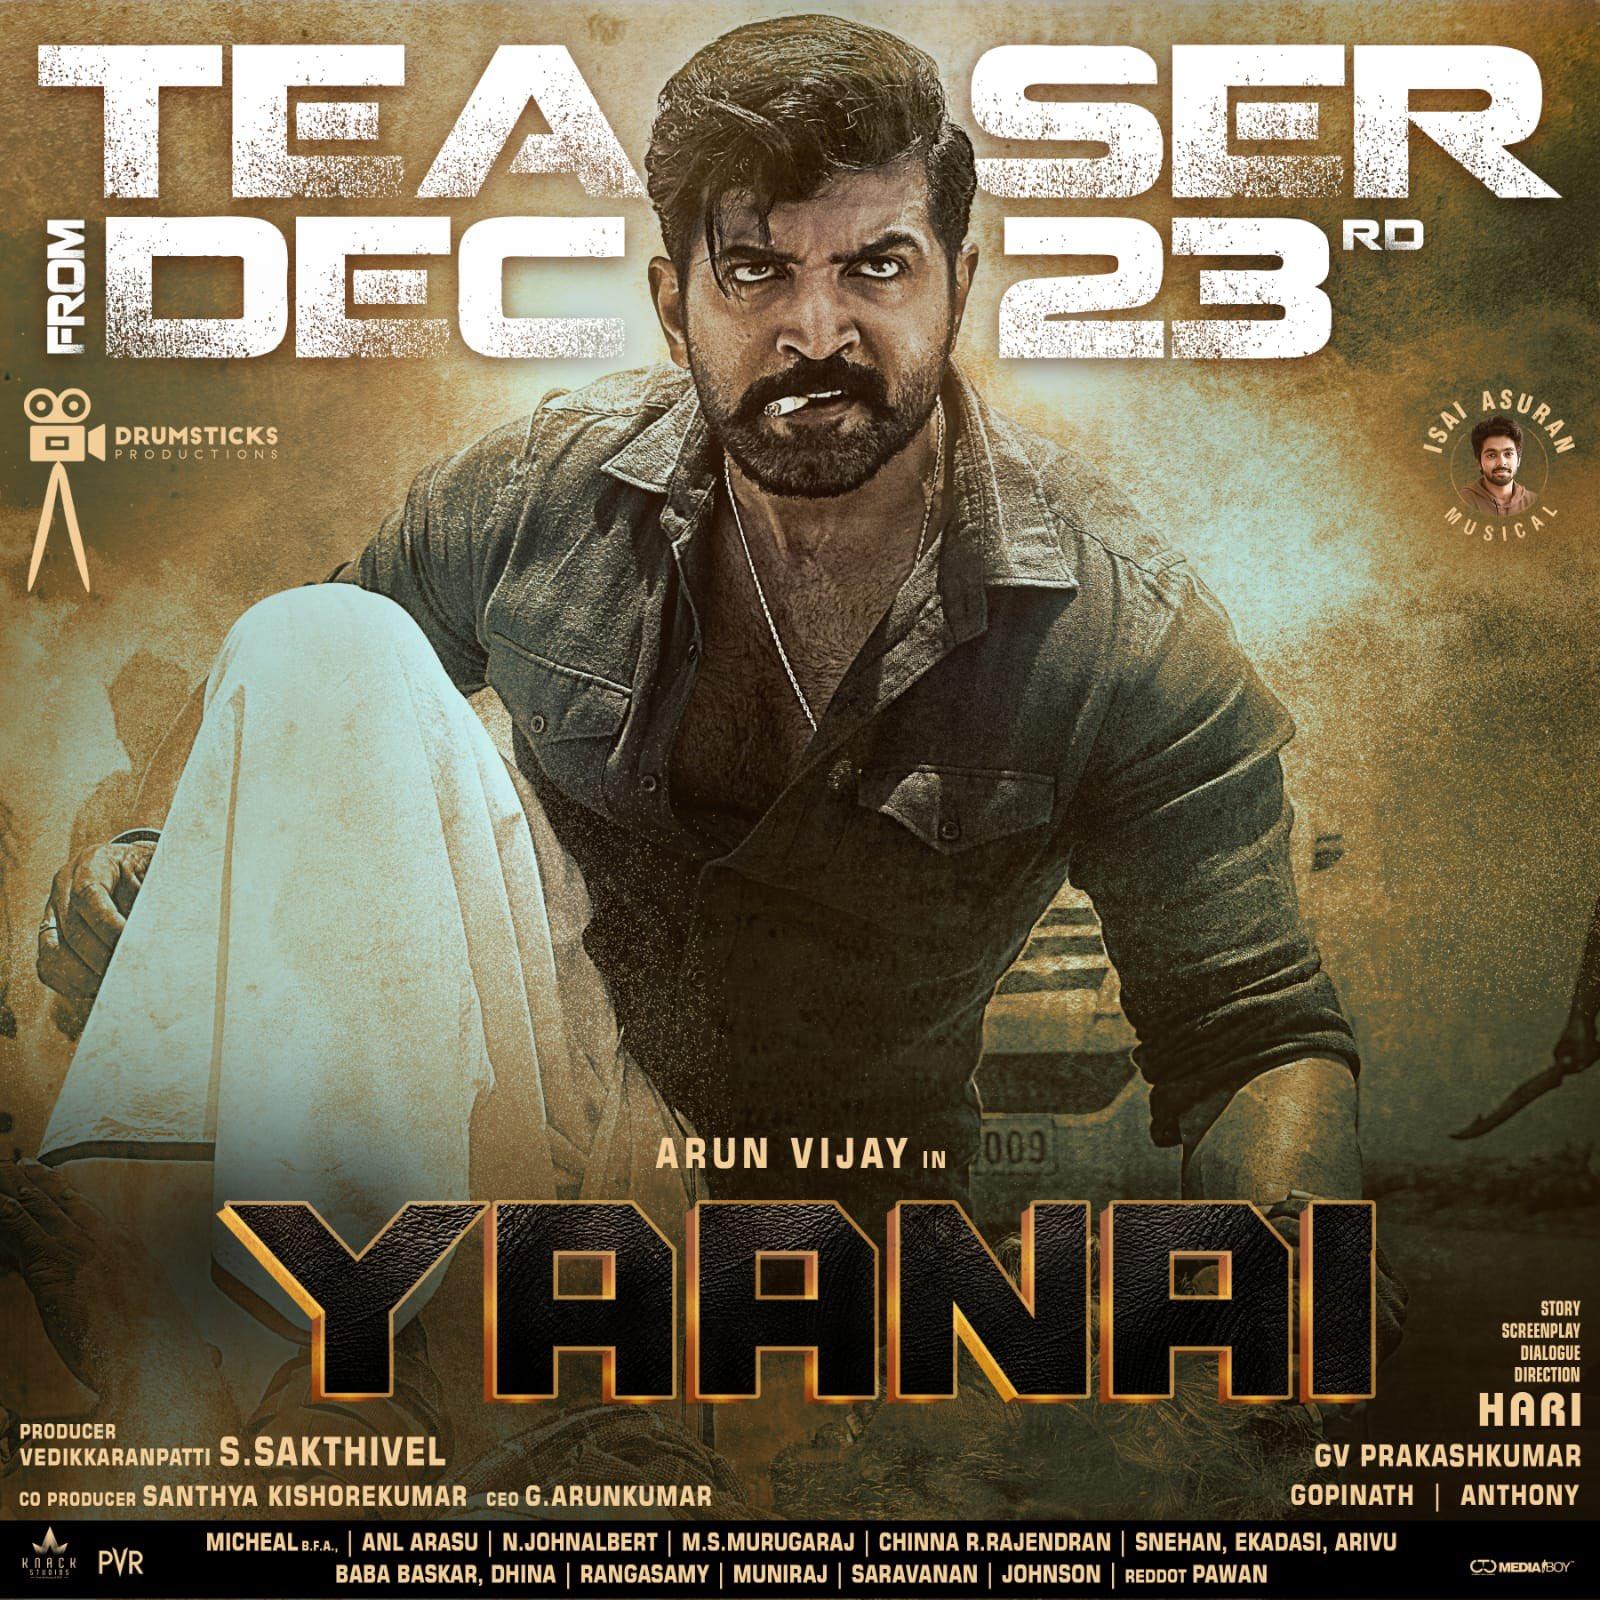 Director Hari, Arun Vijay's Yaanai gears up for teaser release! Tamil